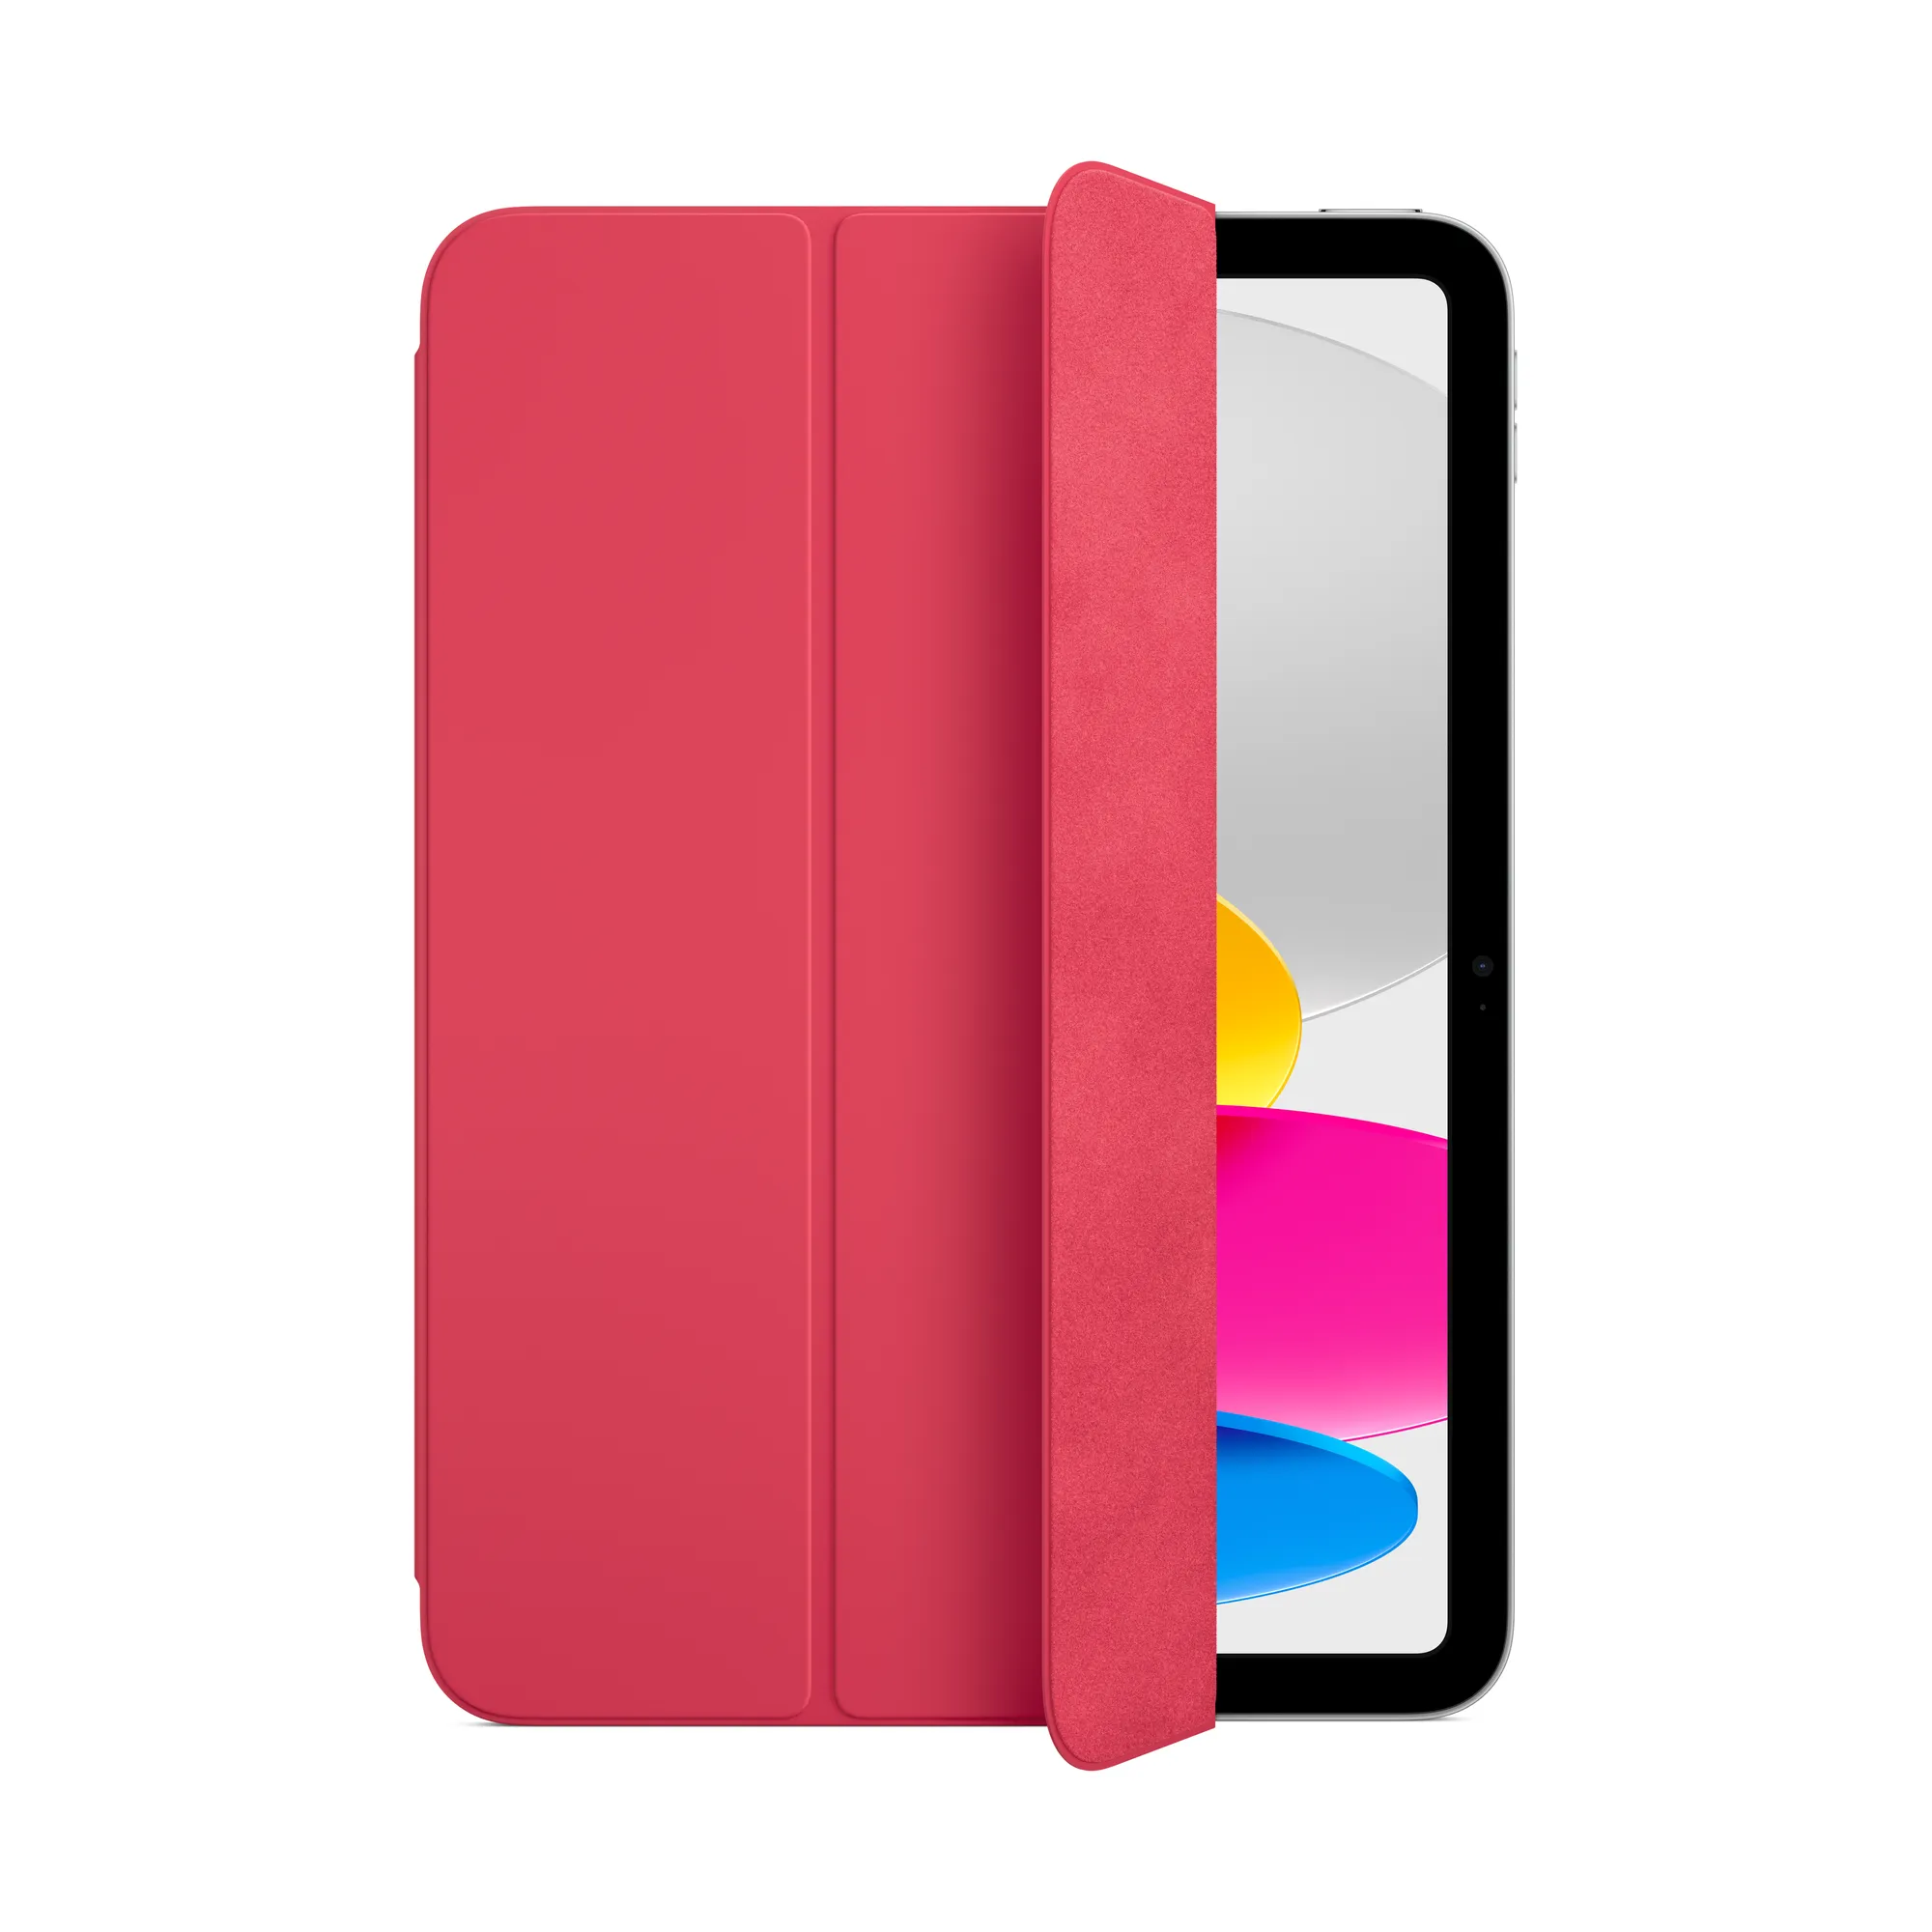 Smart Folio tizedik generációs iPadhez – dinnyepiros